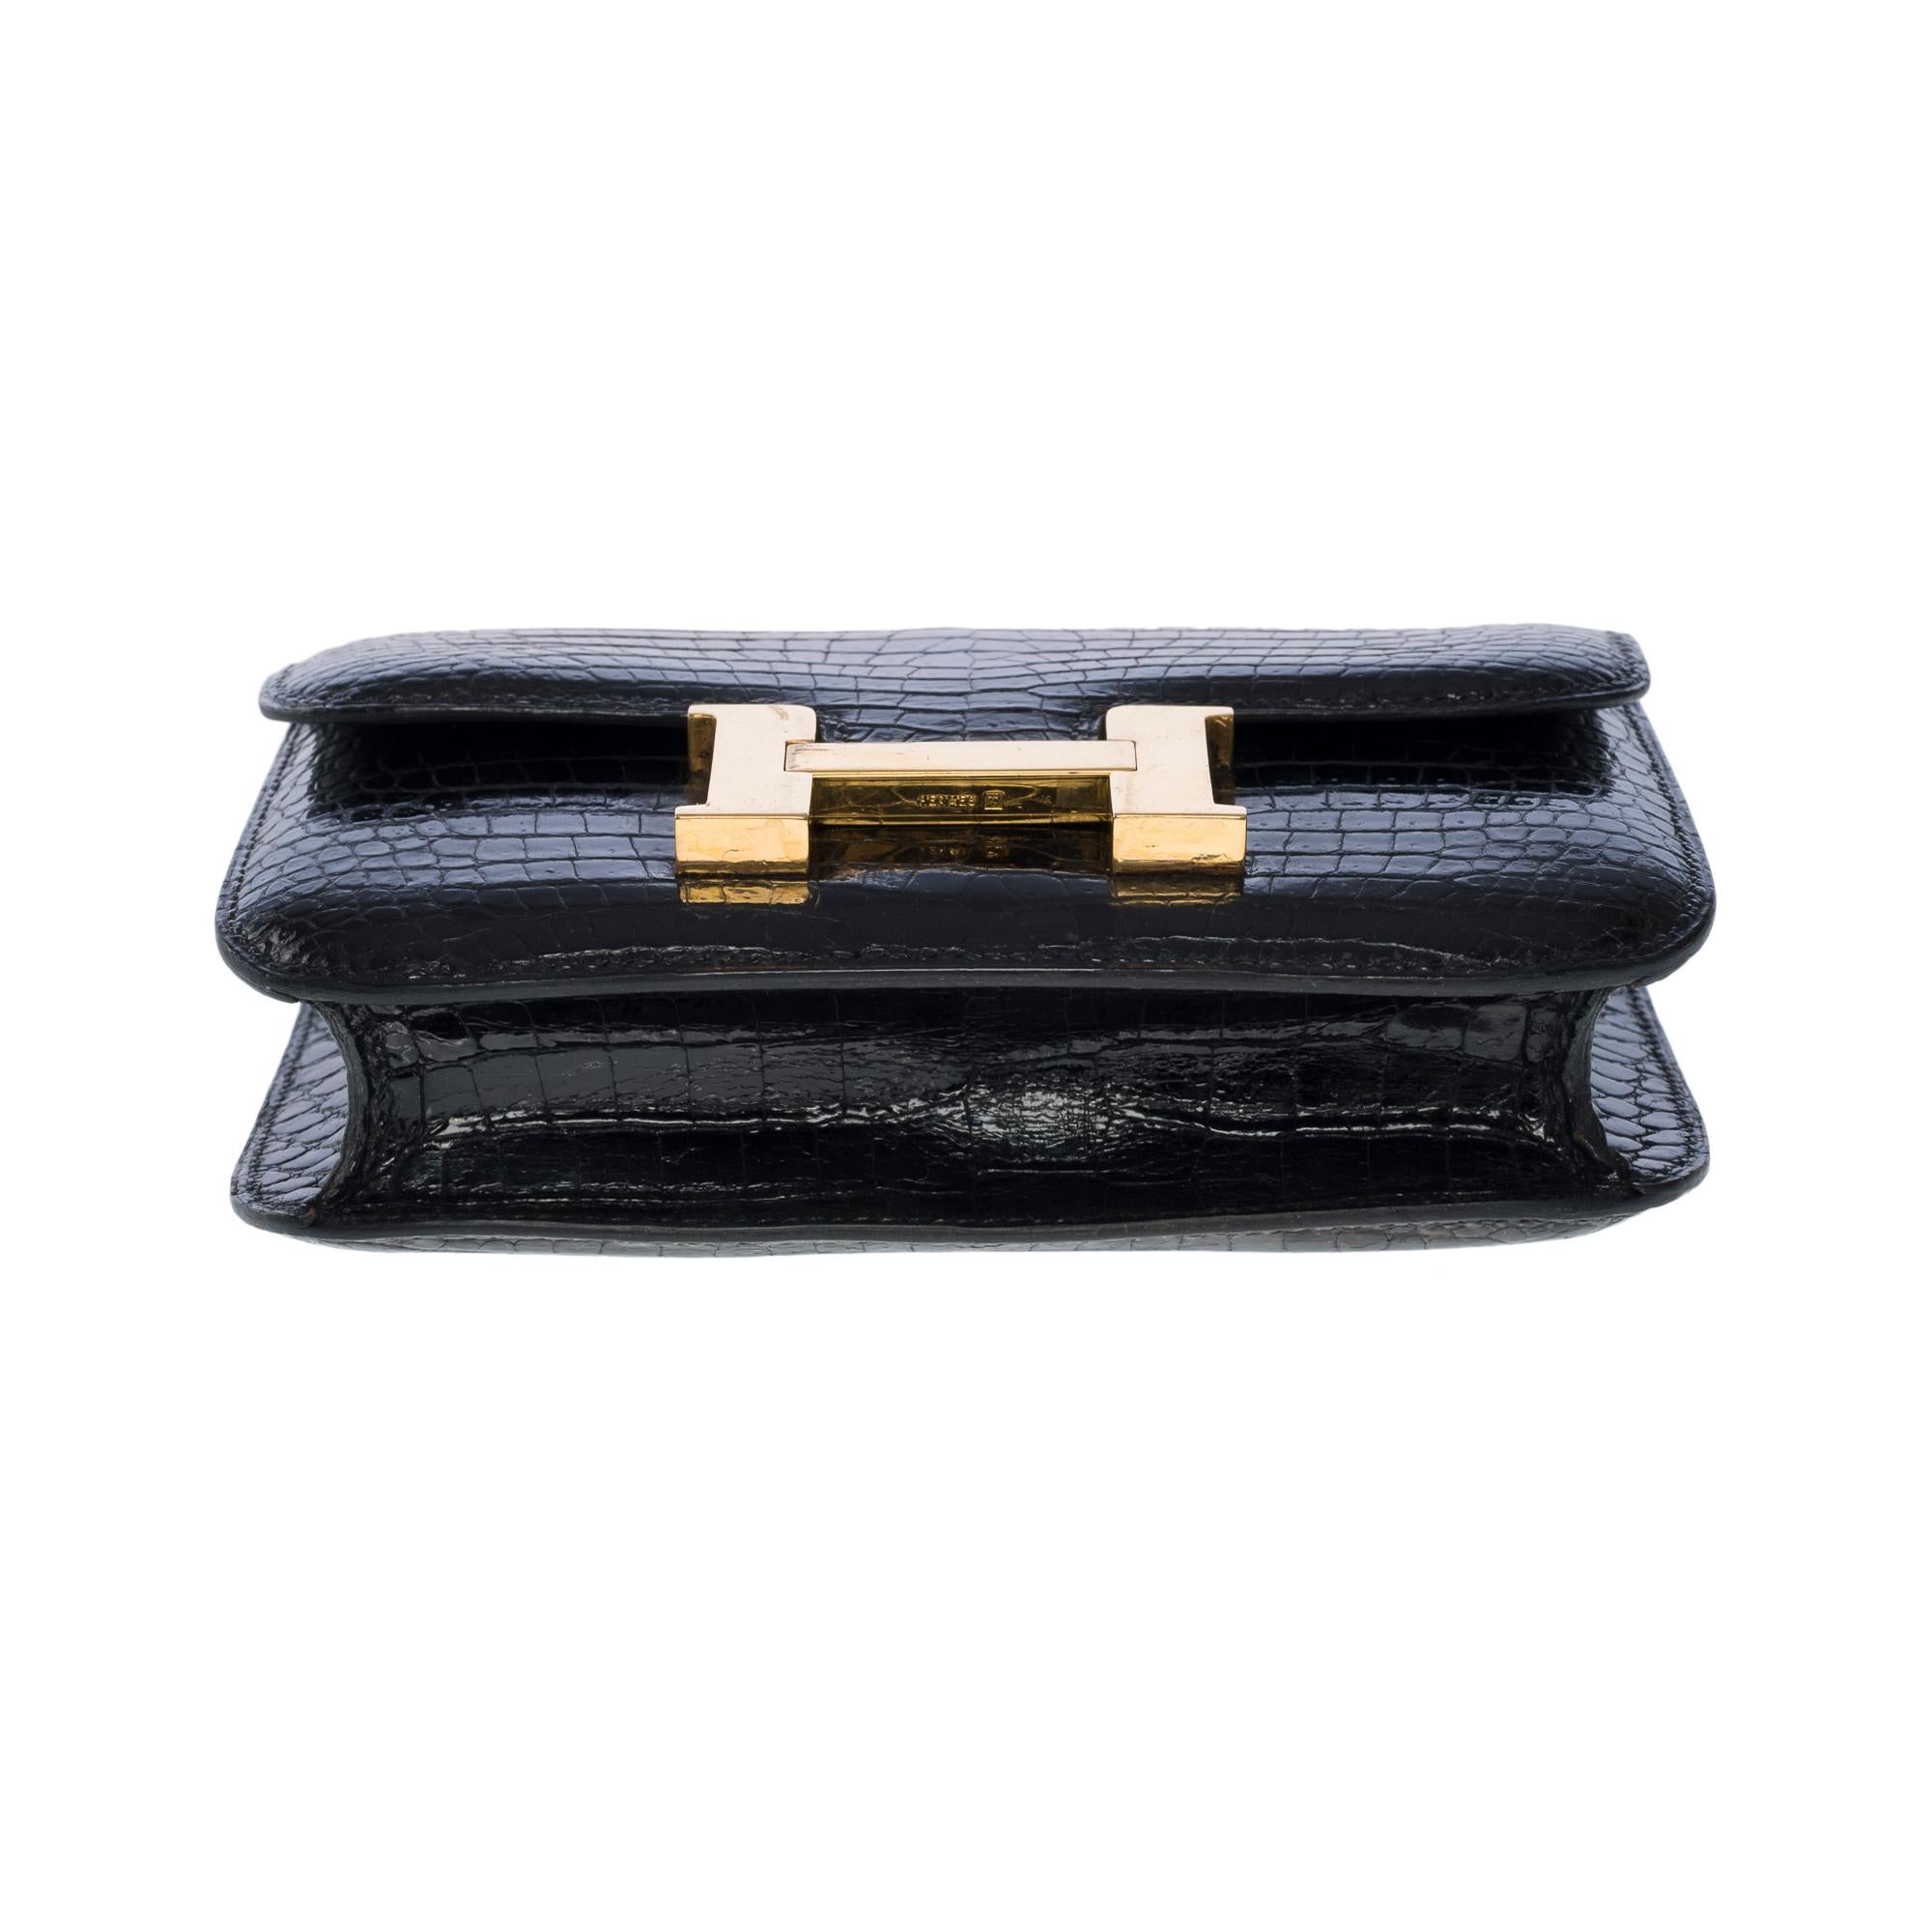 Collector Hermes Constance Micro Clutch flap bag in black Porosus Crocodile, GHW 3